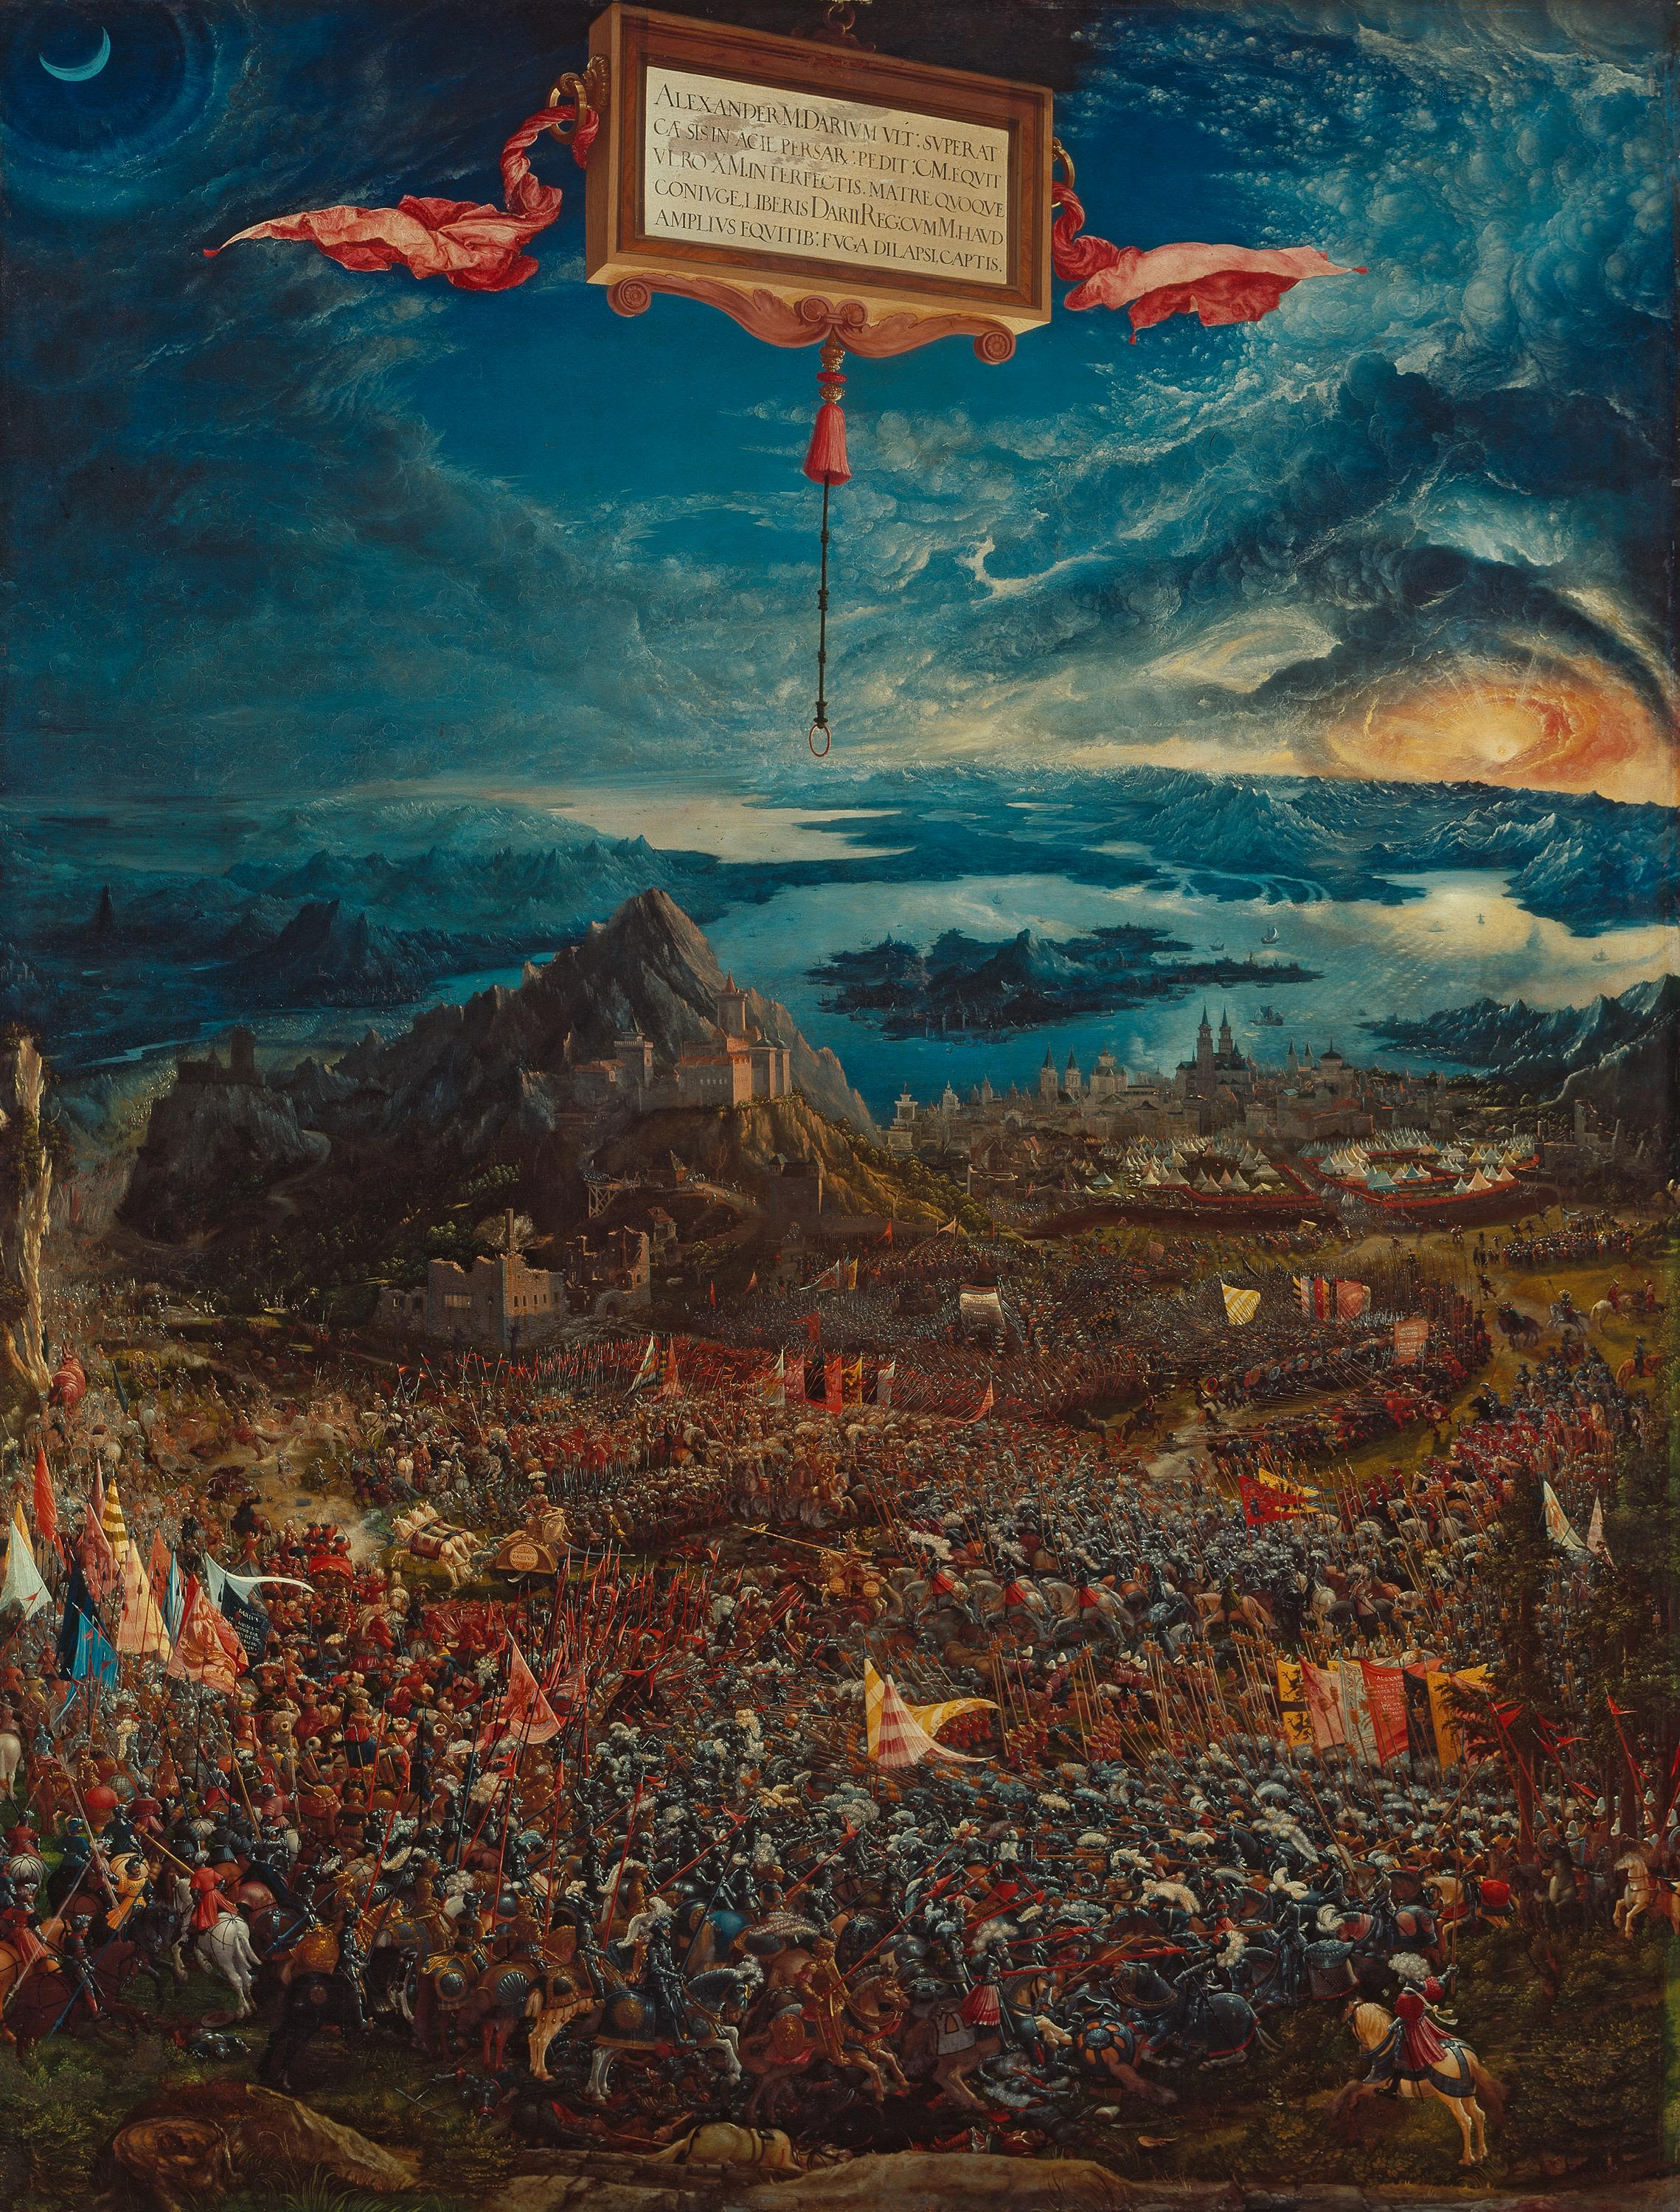 İskender'in Issus'taki Savaşı (orig. "The Battle of Alexander at Issus") by Albrecht Altdorfer - 1529 - 158,4 x 120,3 cm 